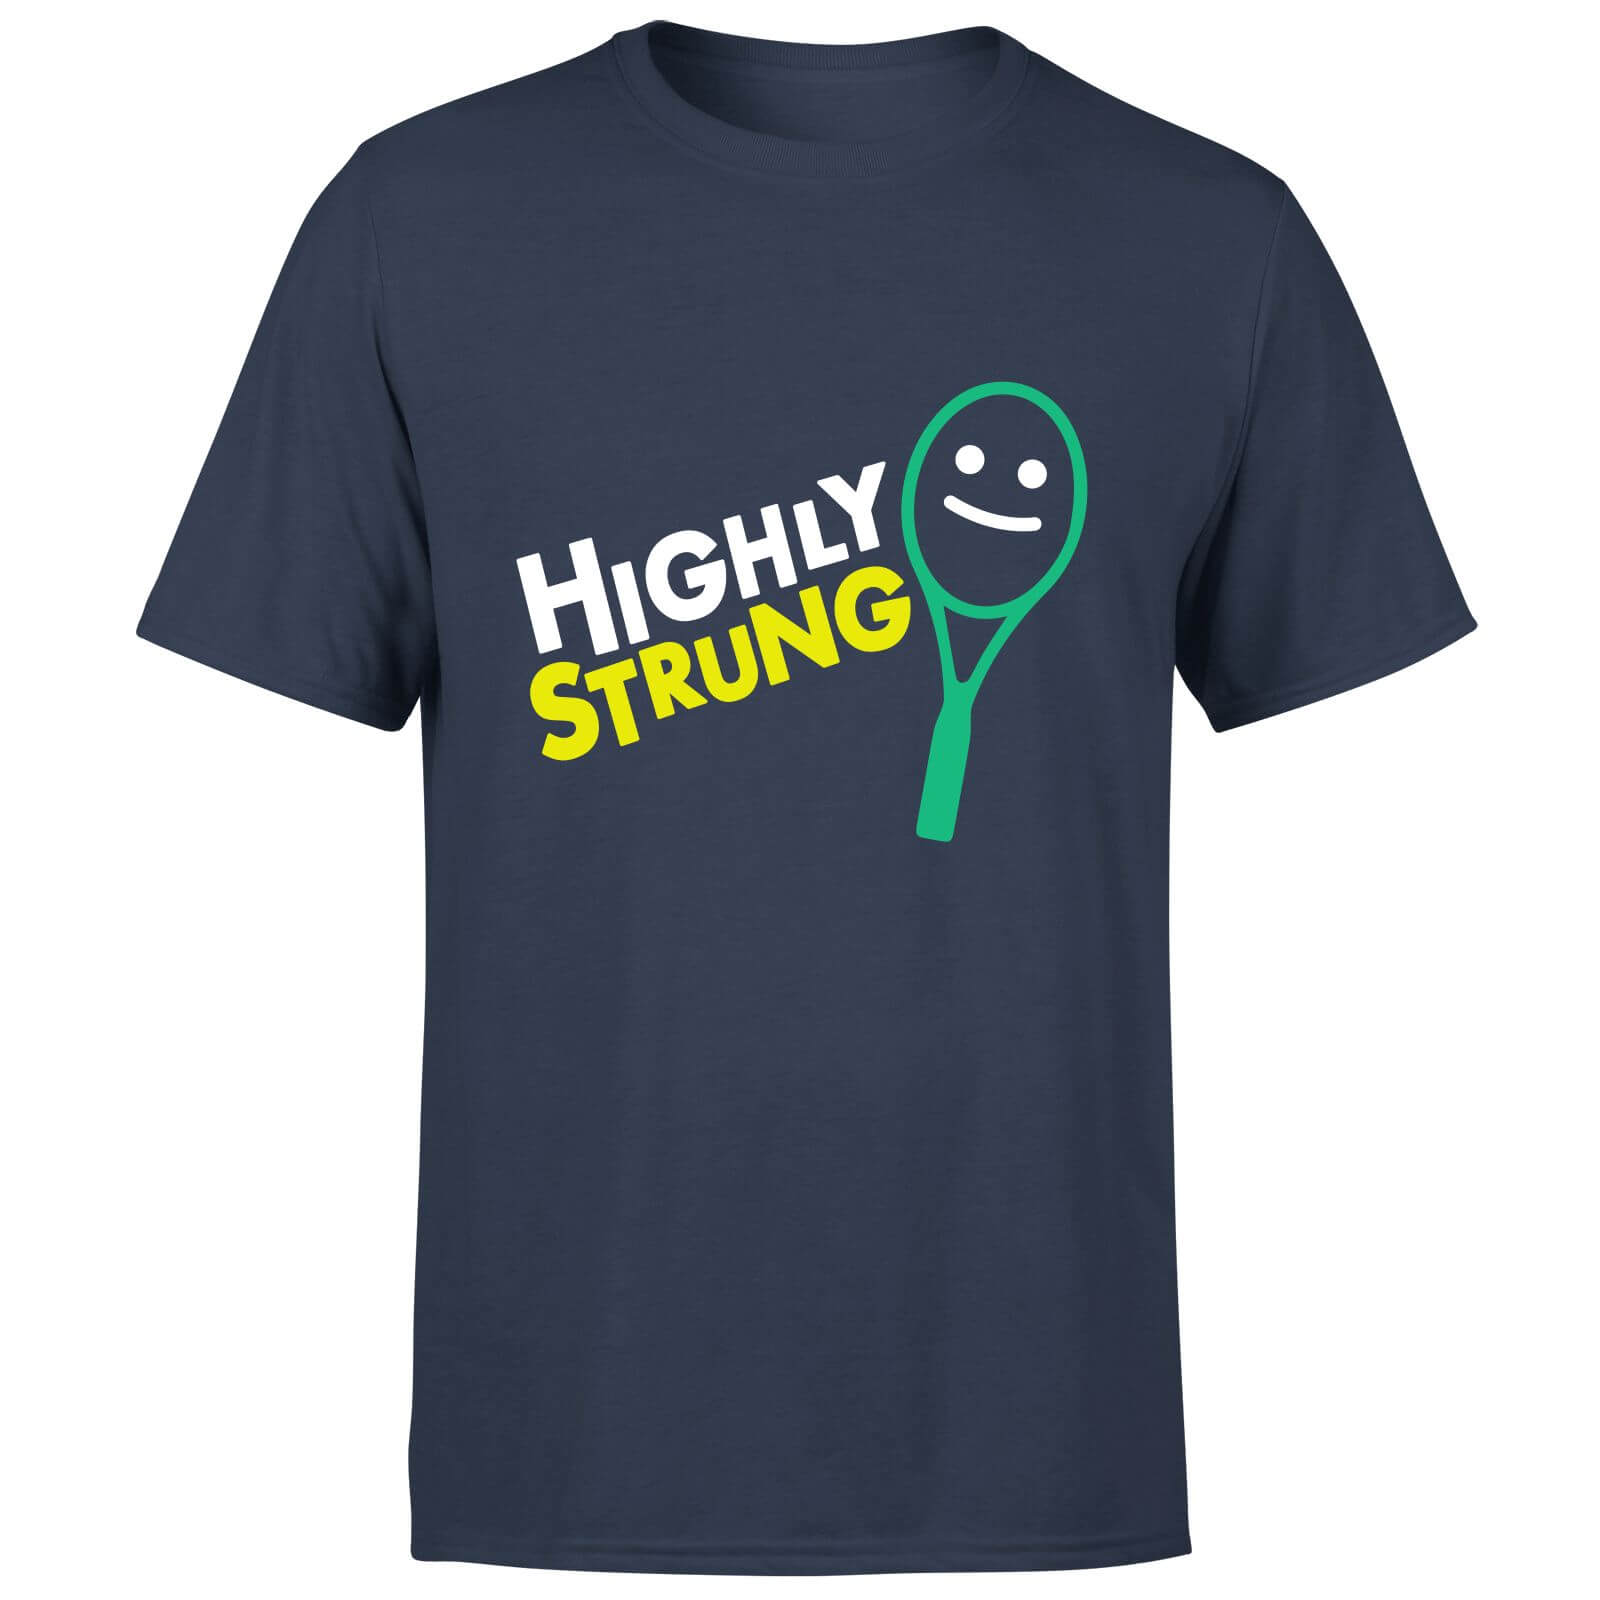 Highly Strung T-Shirt - Navy - S - Navy